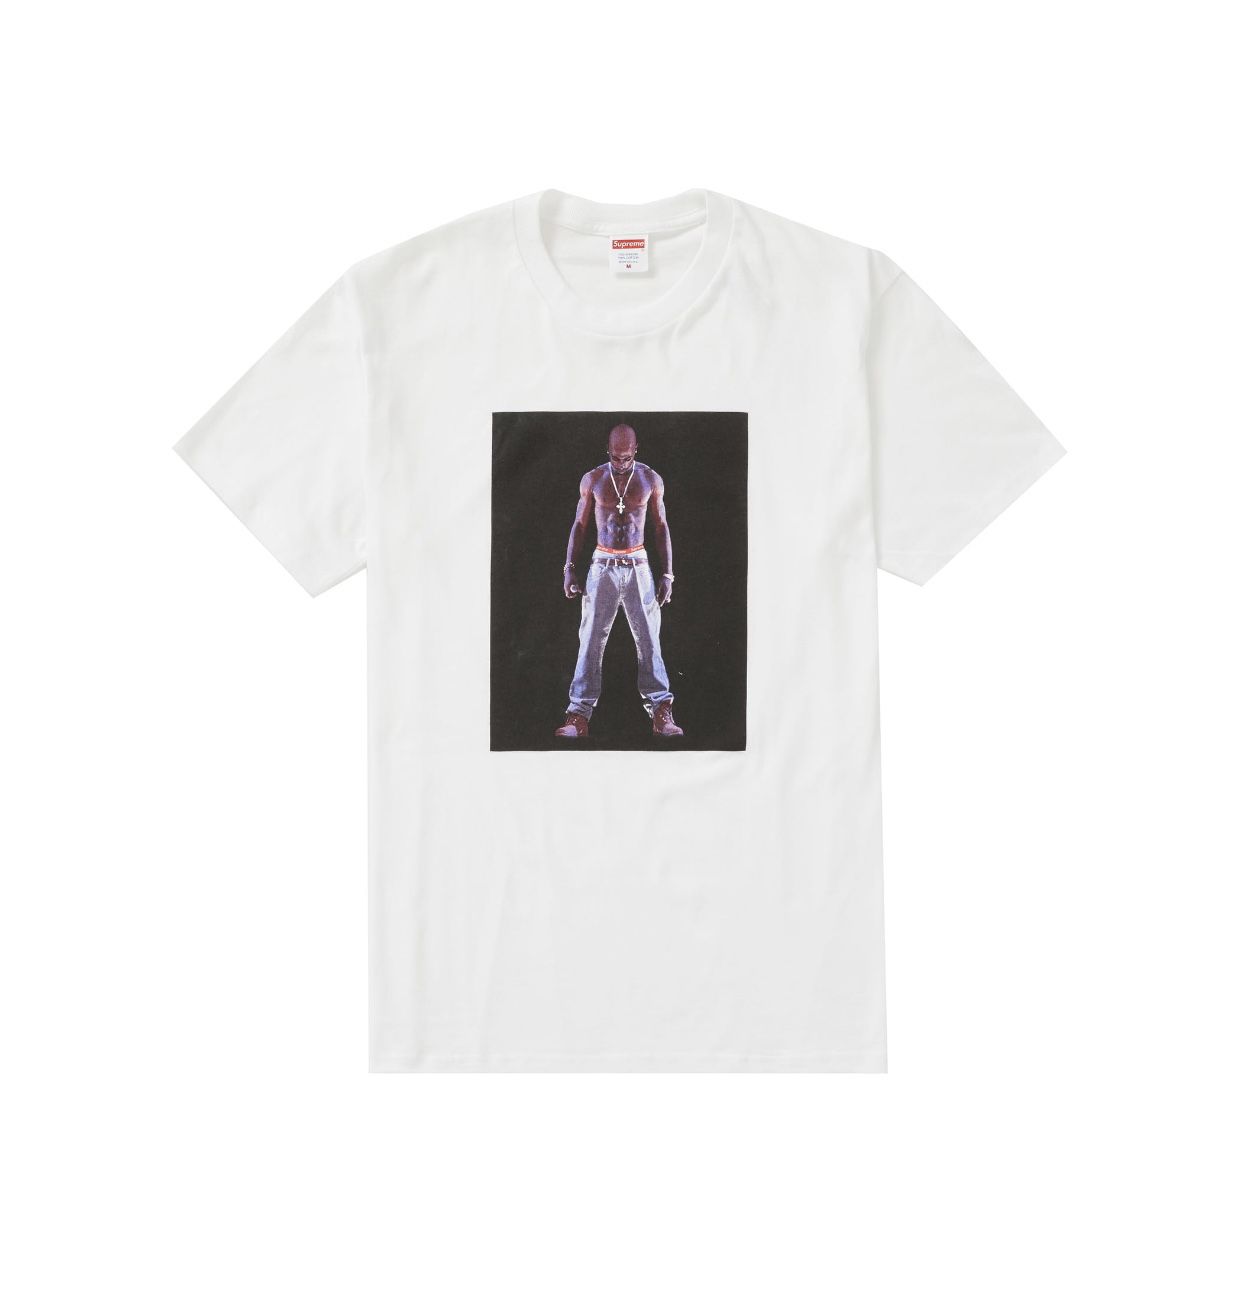 Supreme Tupac hologram t-shirt size XL